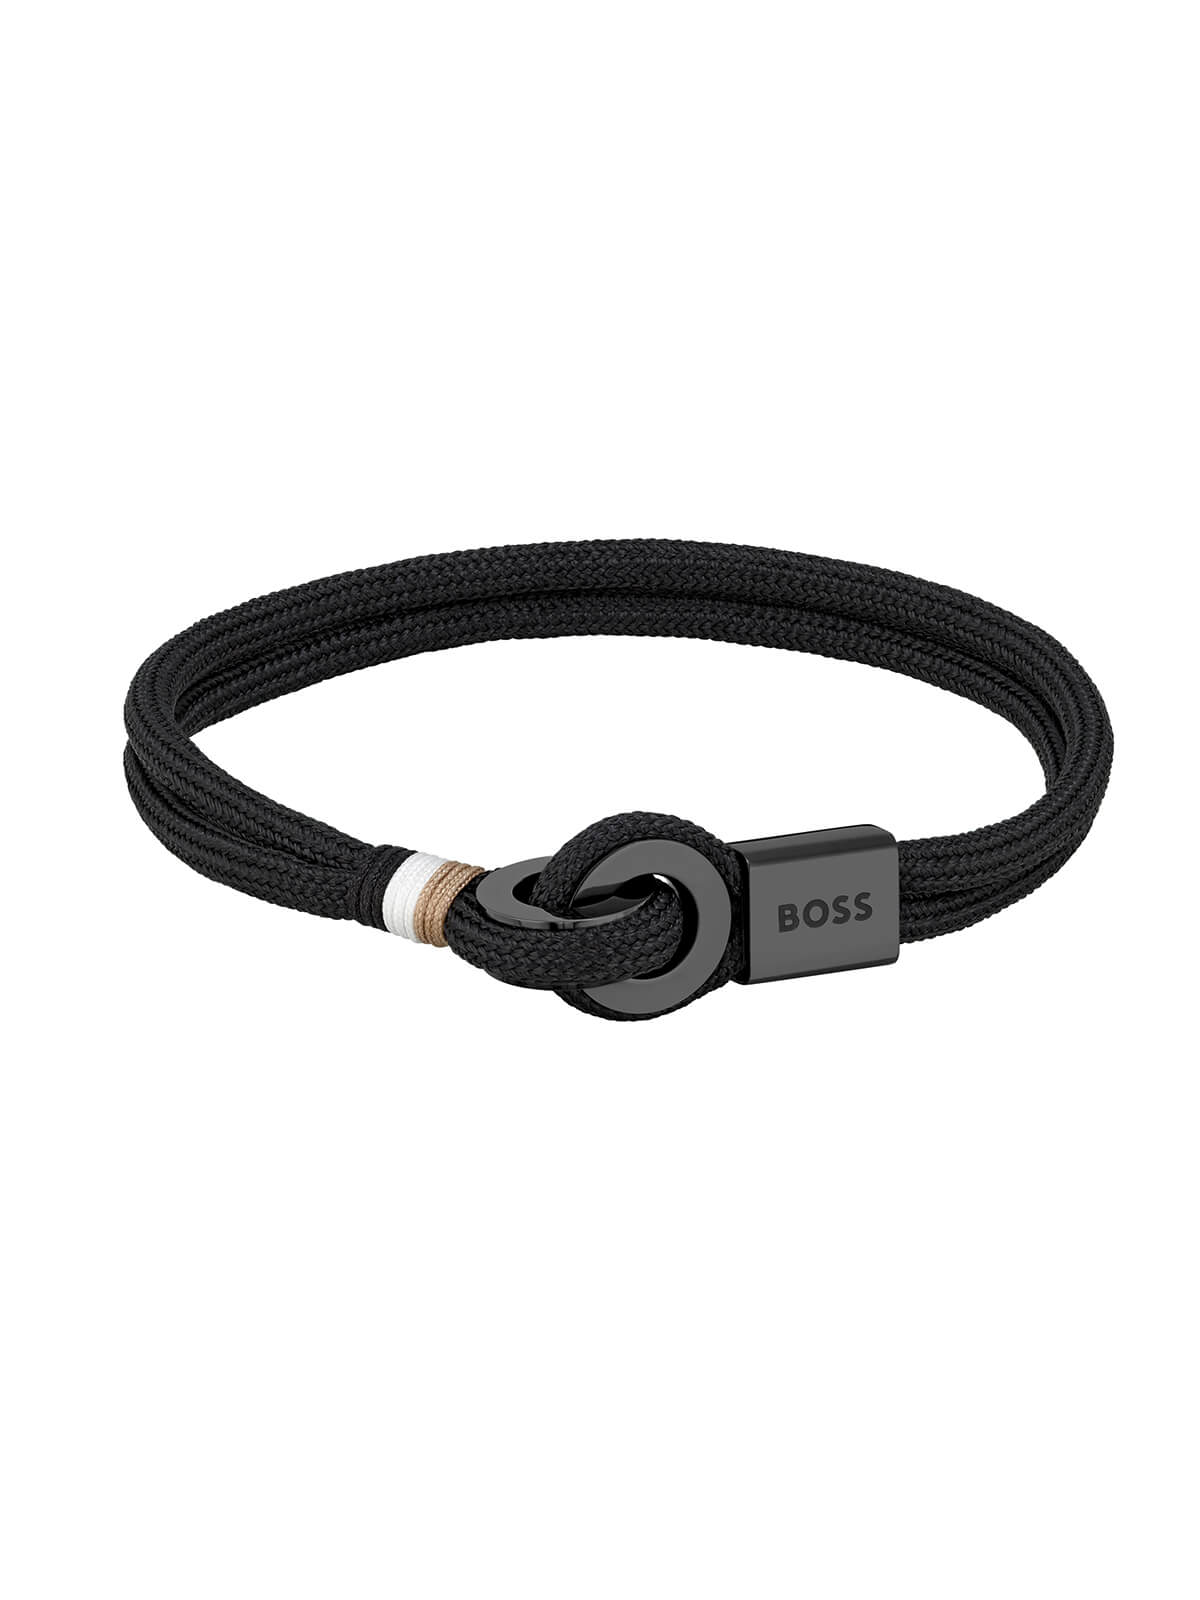 BOSS Thad Sport Black Nylon Bracelet 1580472M